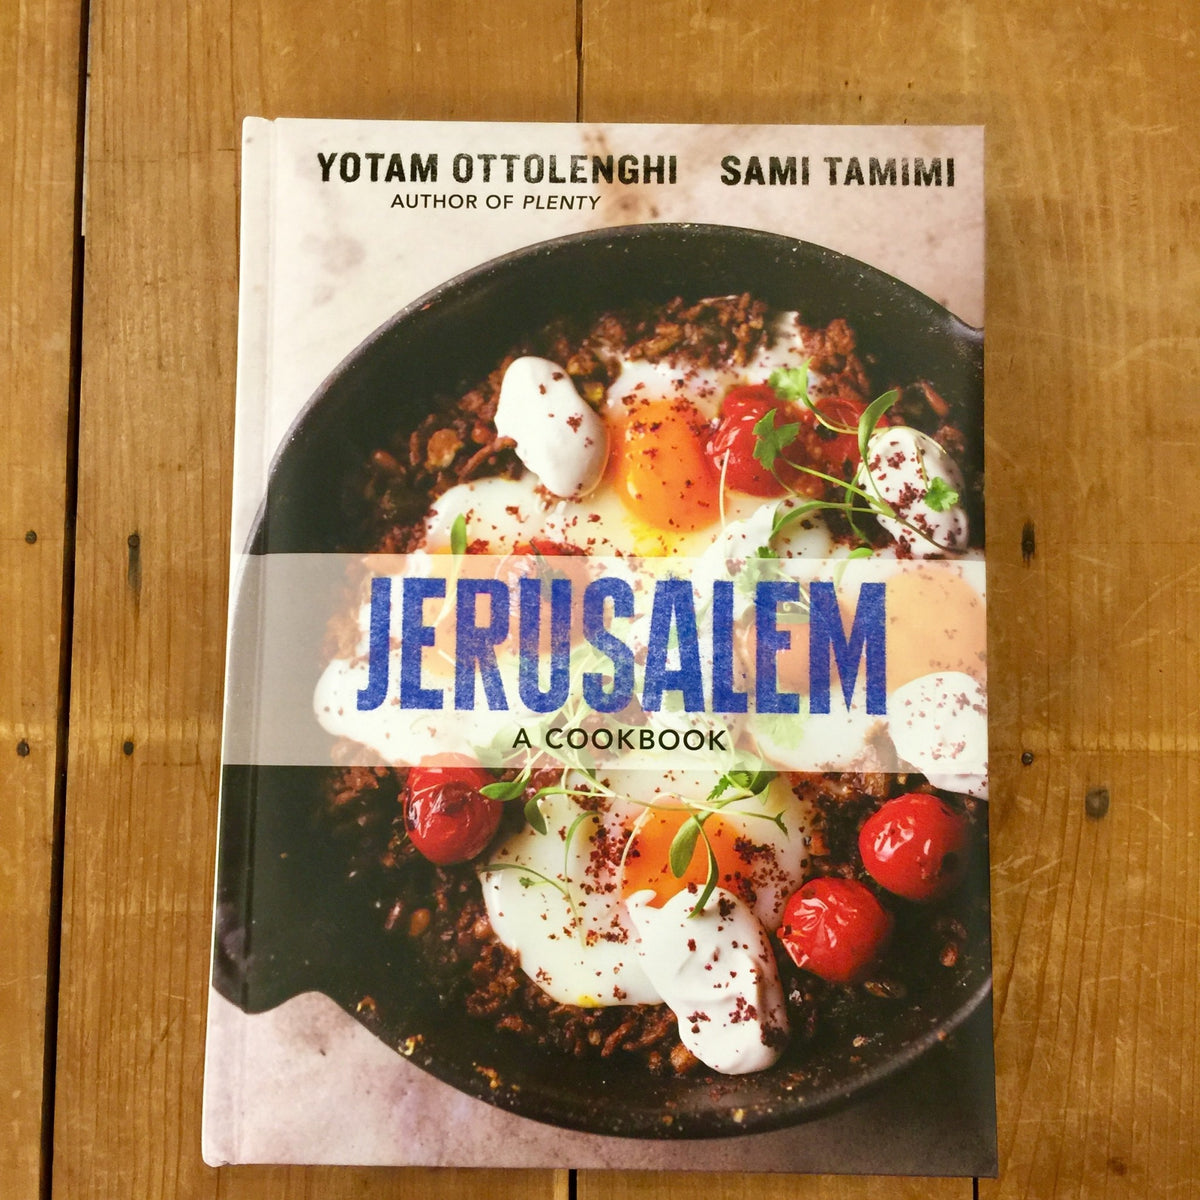 Jerusalem: A Cookbook - Ottolenghi & Tamimi